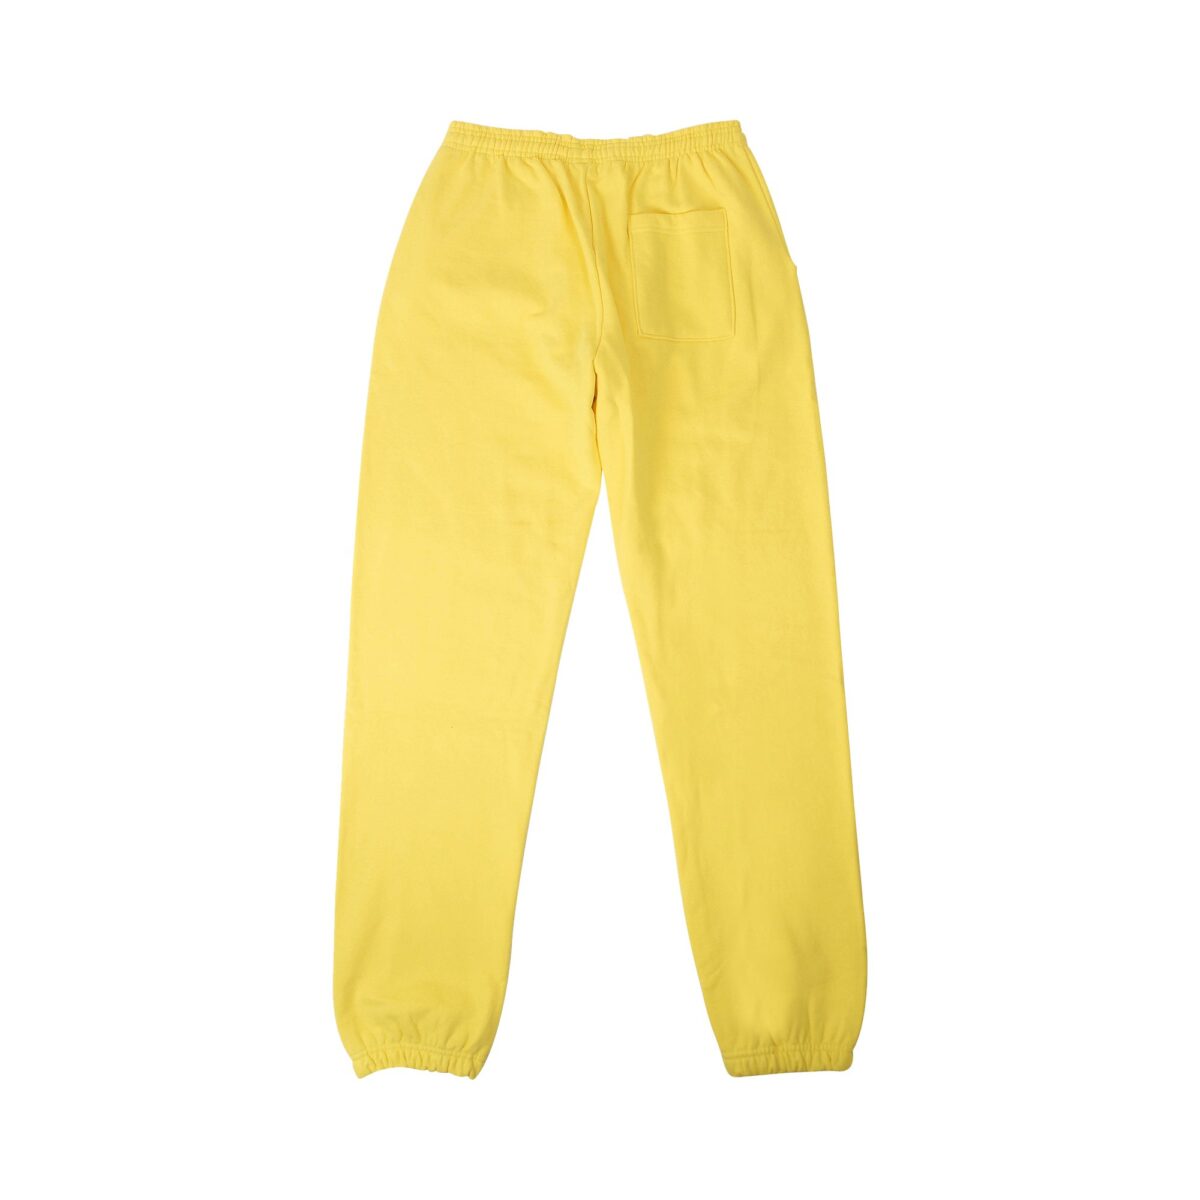 Sp5der Logo Print Sweatpants ‘Yellow’Sp5der Logo Print Sweatpants ‘Yellow’